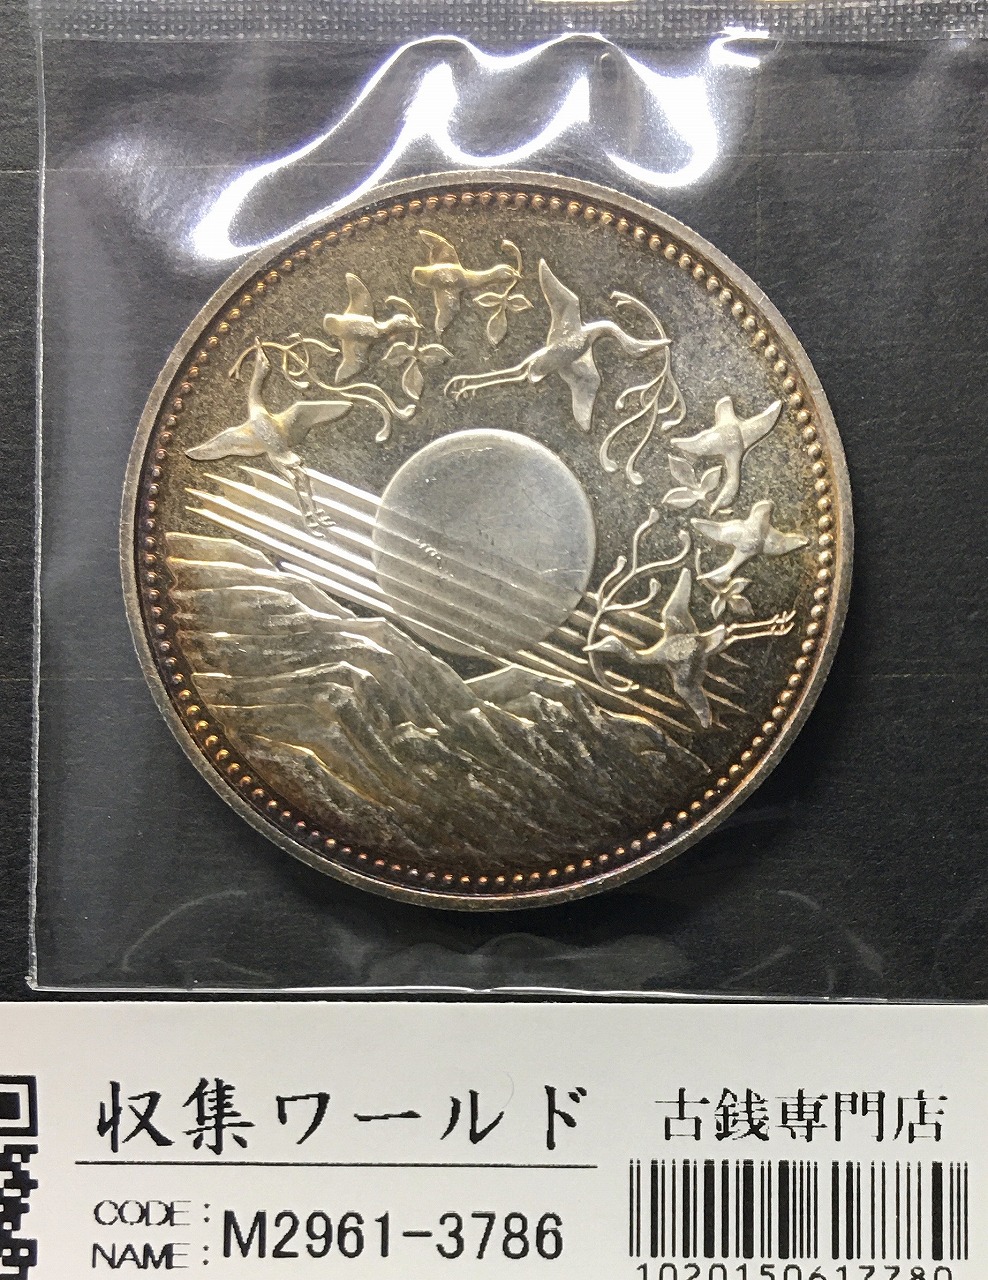 昭和天皇御在位60年記念 1万円銀貨 1986年銘(昭和61) 未使用 レインボートーン